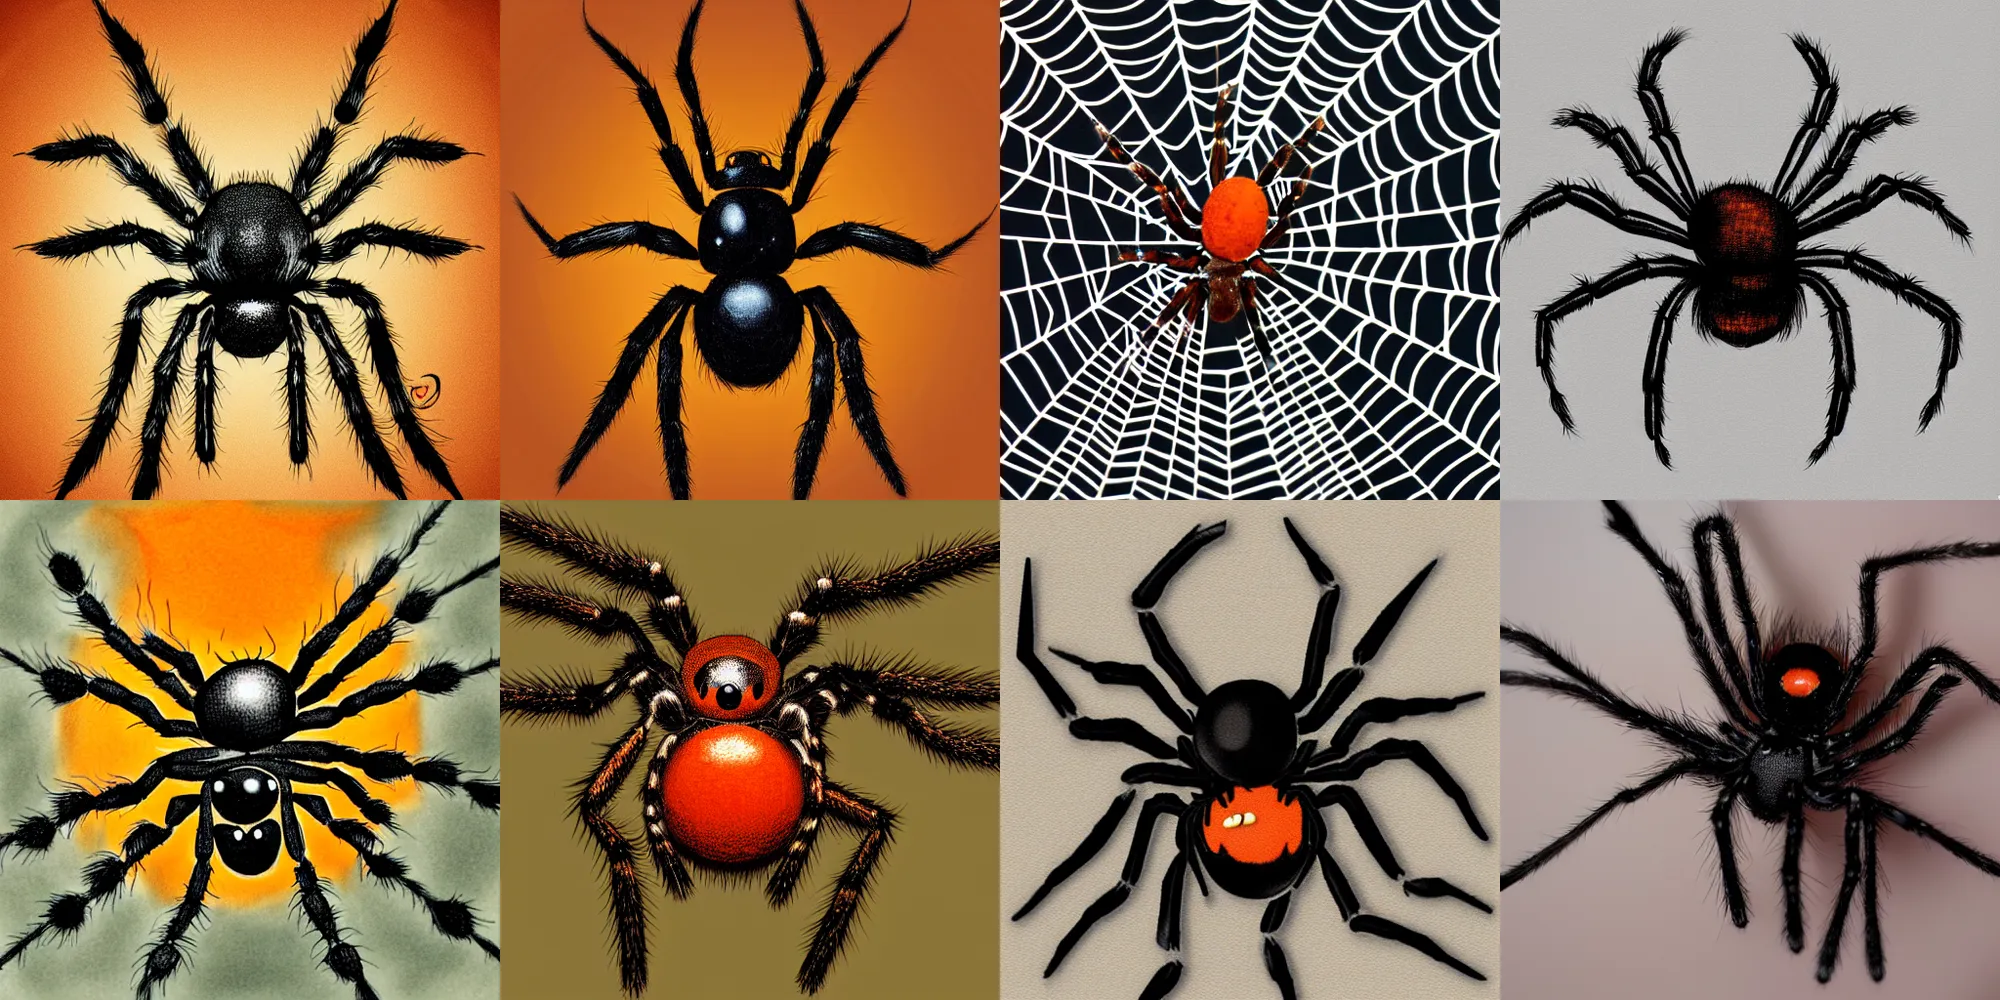 Prompt: dumb old spider, tones of orange and black